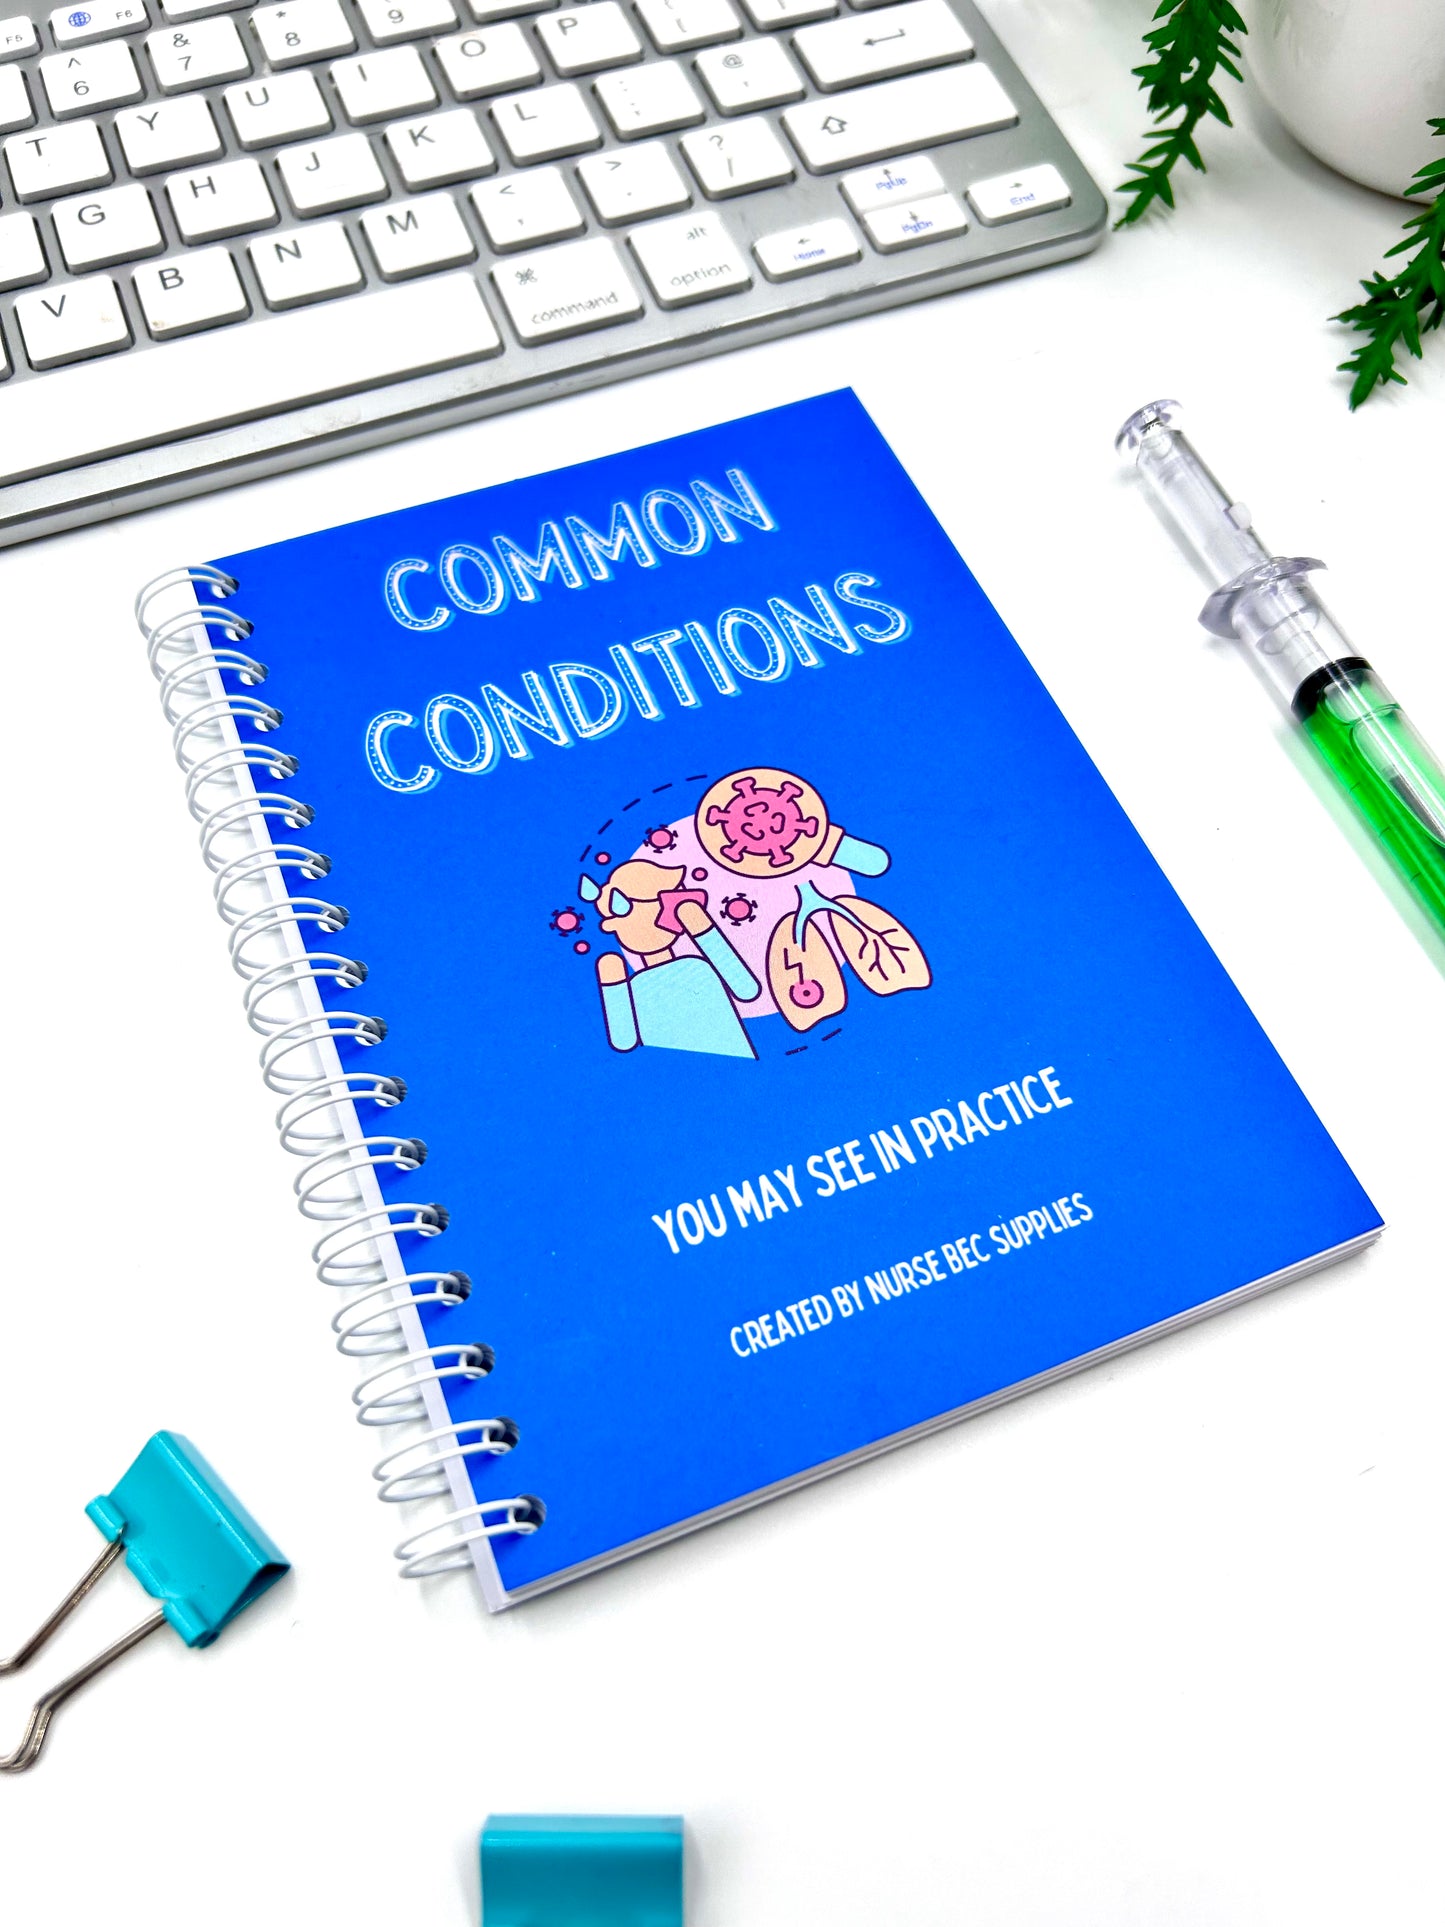 Common Conditions pocket book PRE ORDER